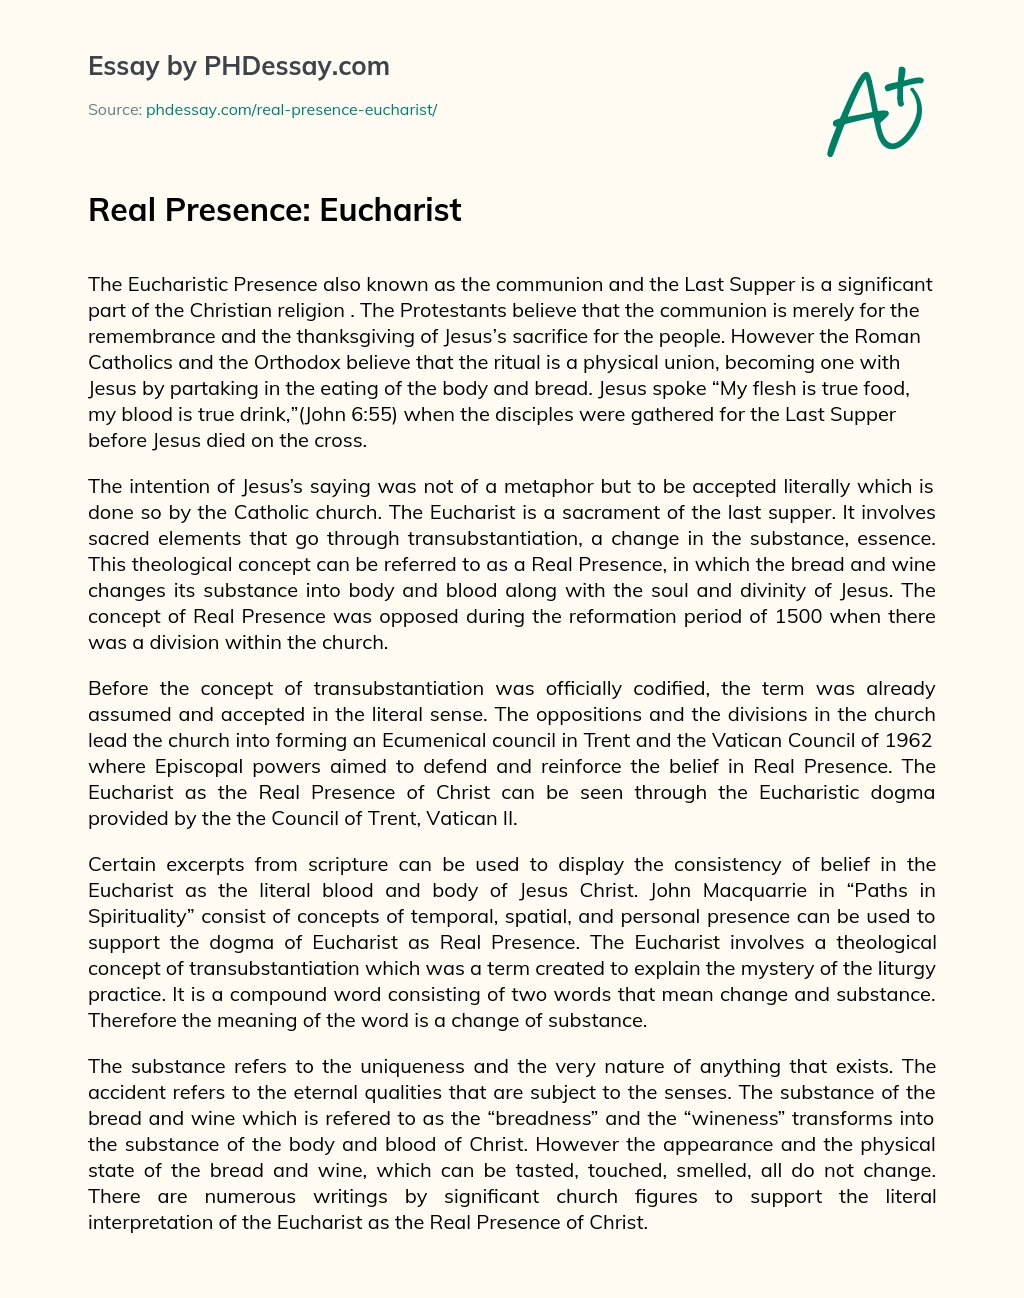 Real Presence: Eucharist essay